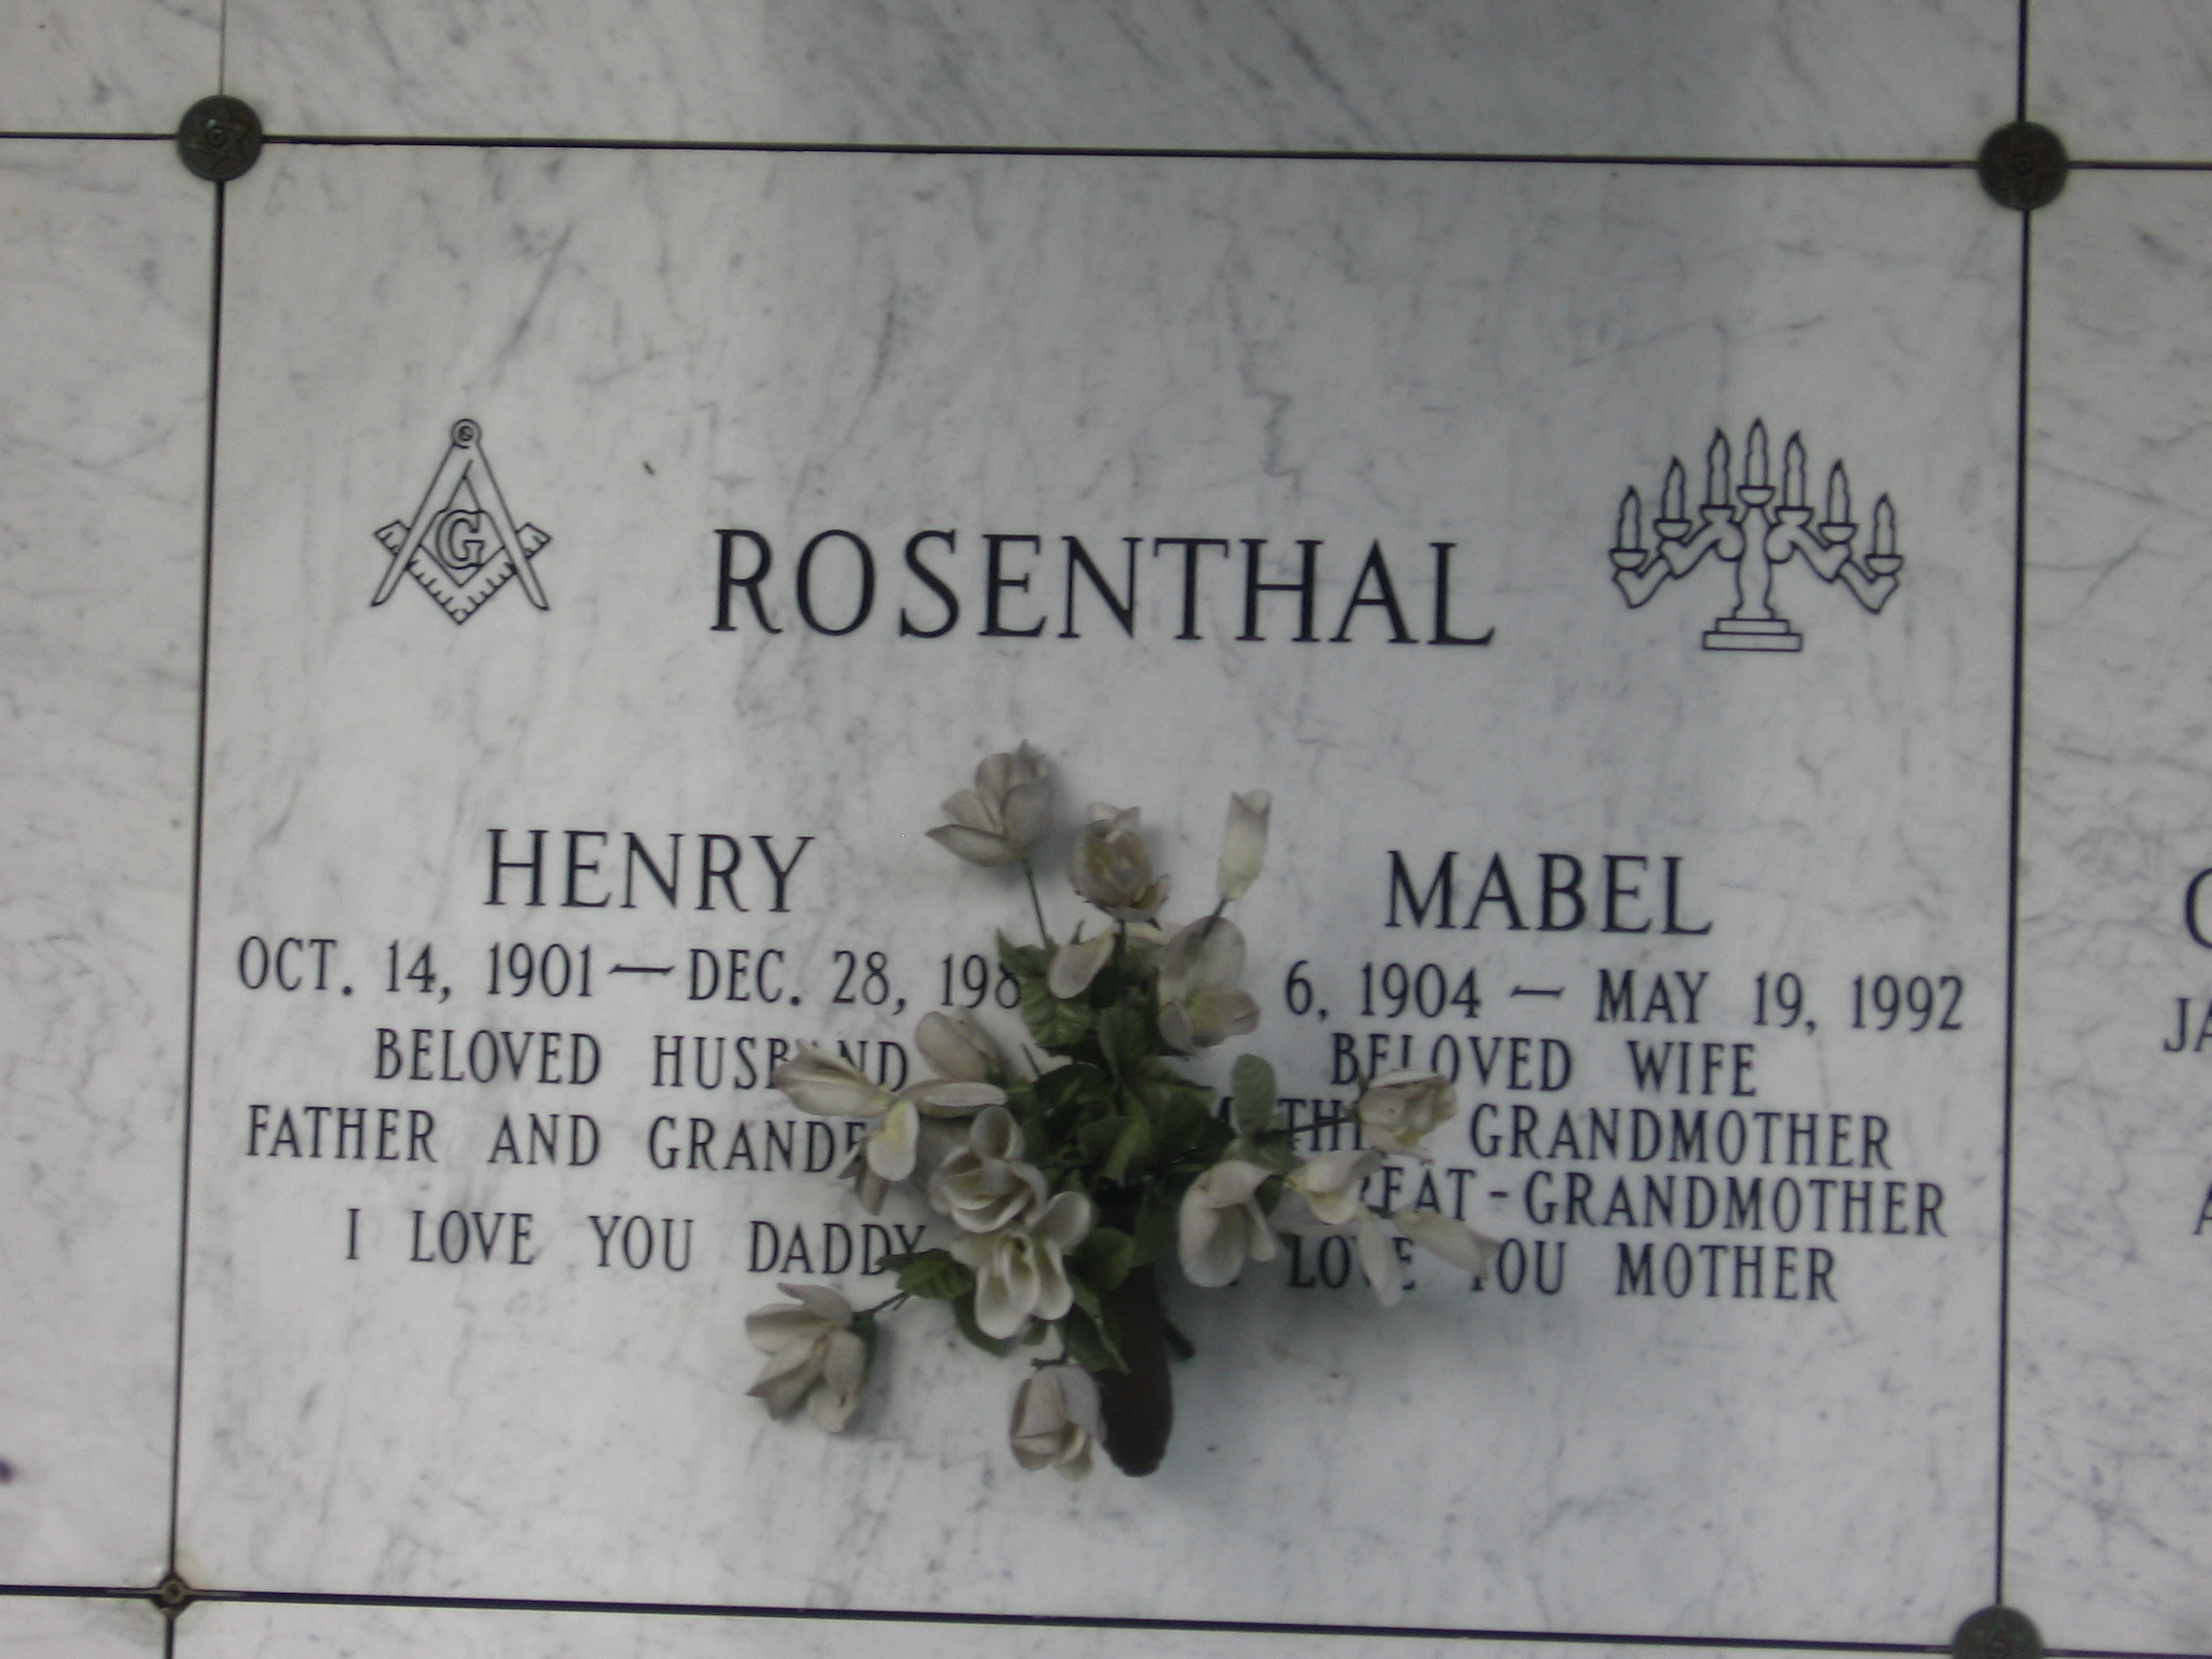 Henry Rosenthal